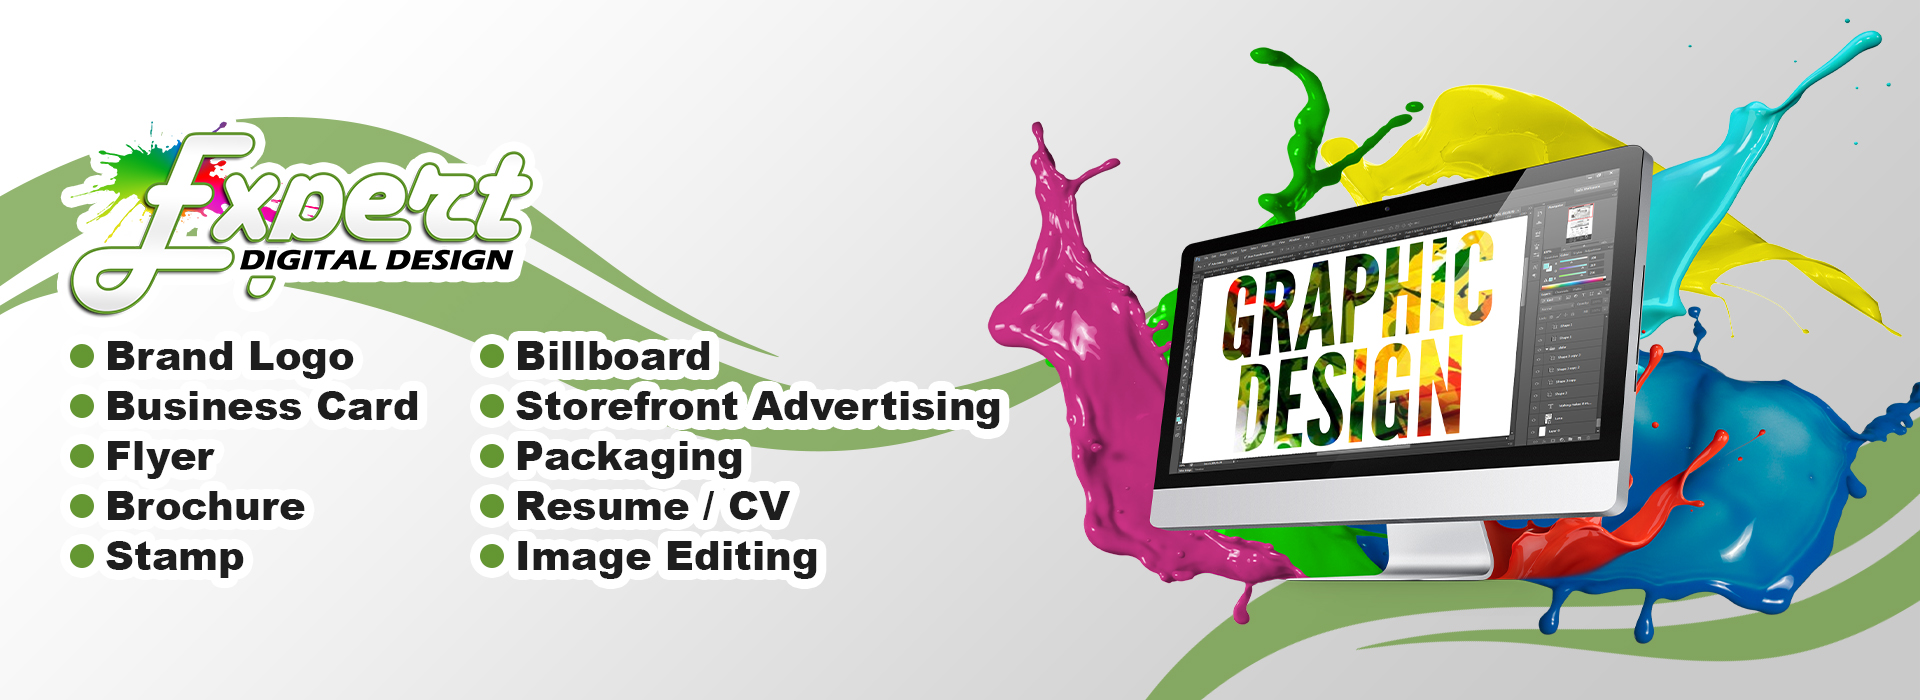 Expert Digital Design Graphic Design business service offers Brand Logo, Business Card, Flyer, Brochure, Stamp, Billboard, Storefront Advertising, Packaging, Resume / CV, and Image Editing